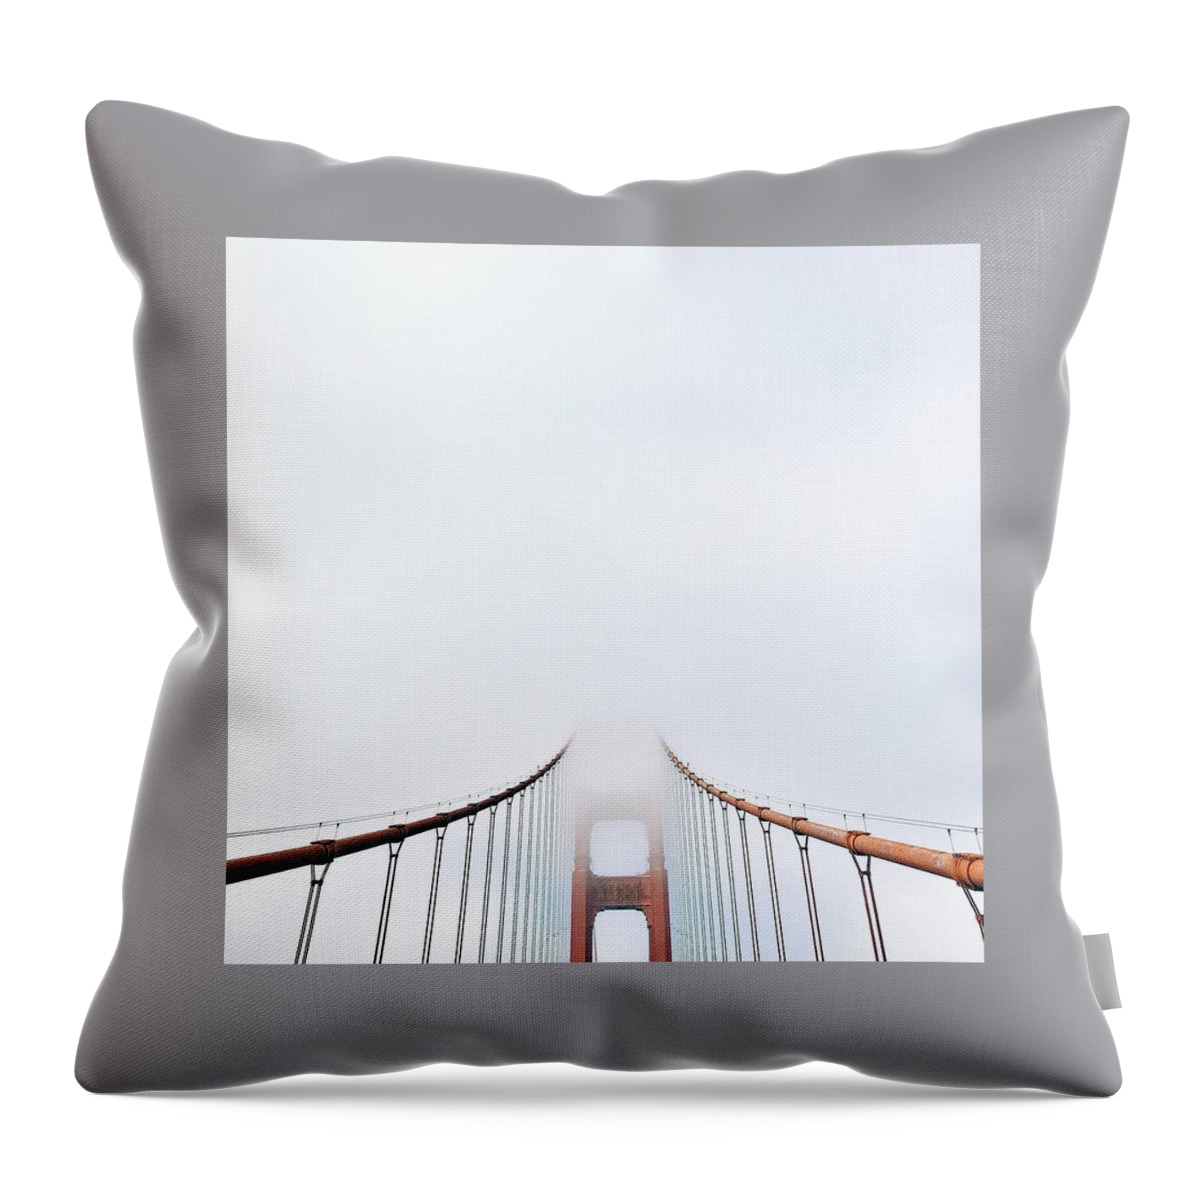 Golden Gate Bridge Throw Pillow featuring the photograph Bridge by Juliette Spirson